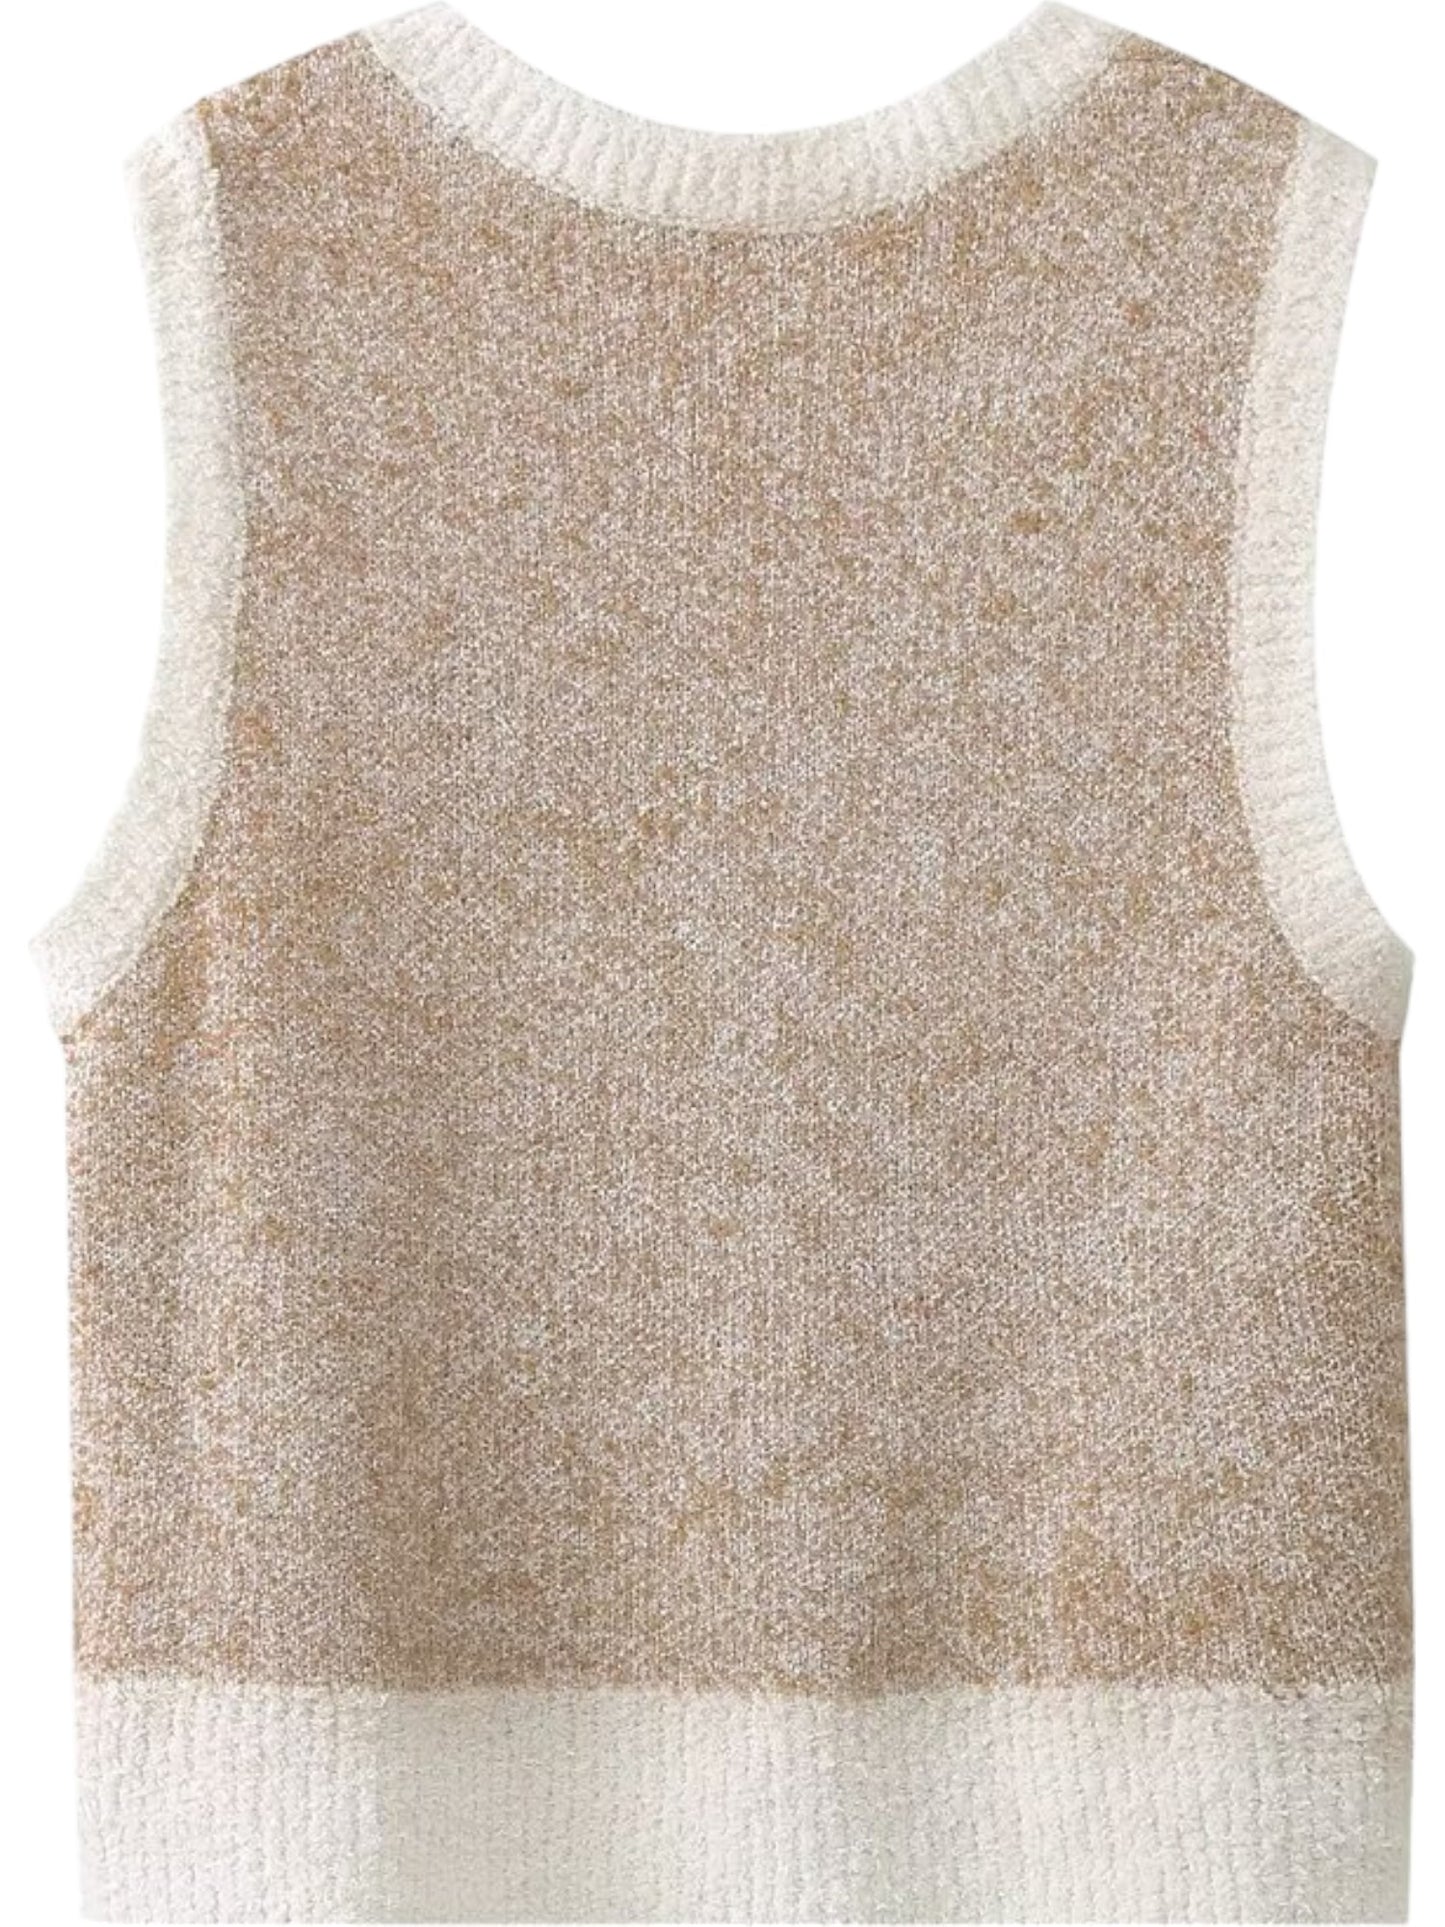 Brushed Light Tan Clover Pattern Light Knit Vest